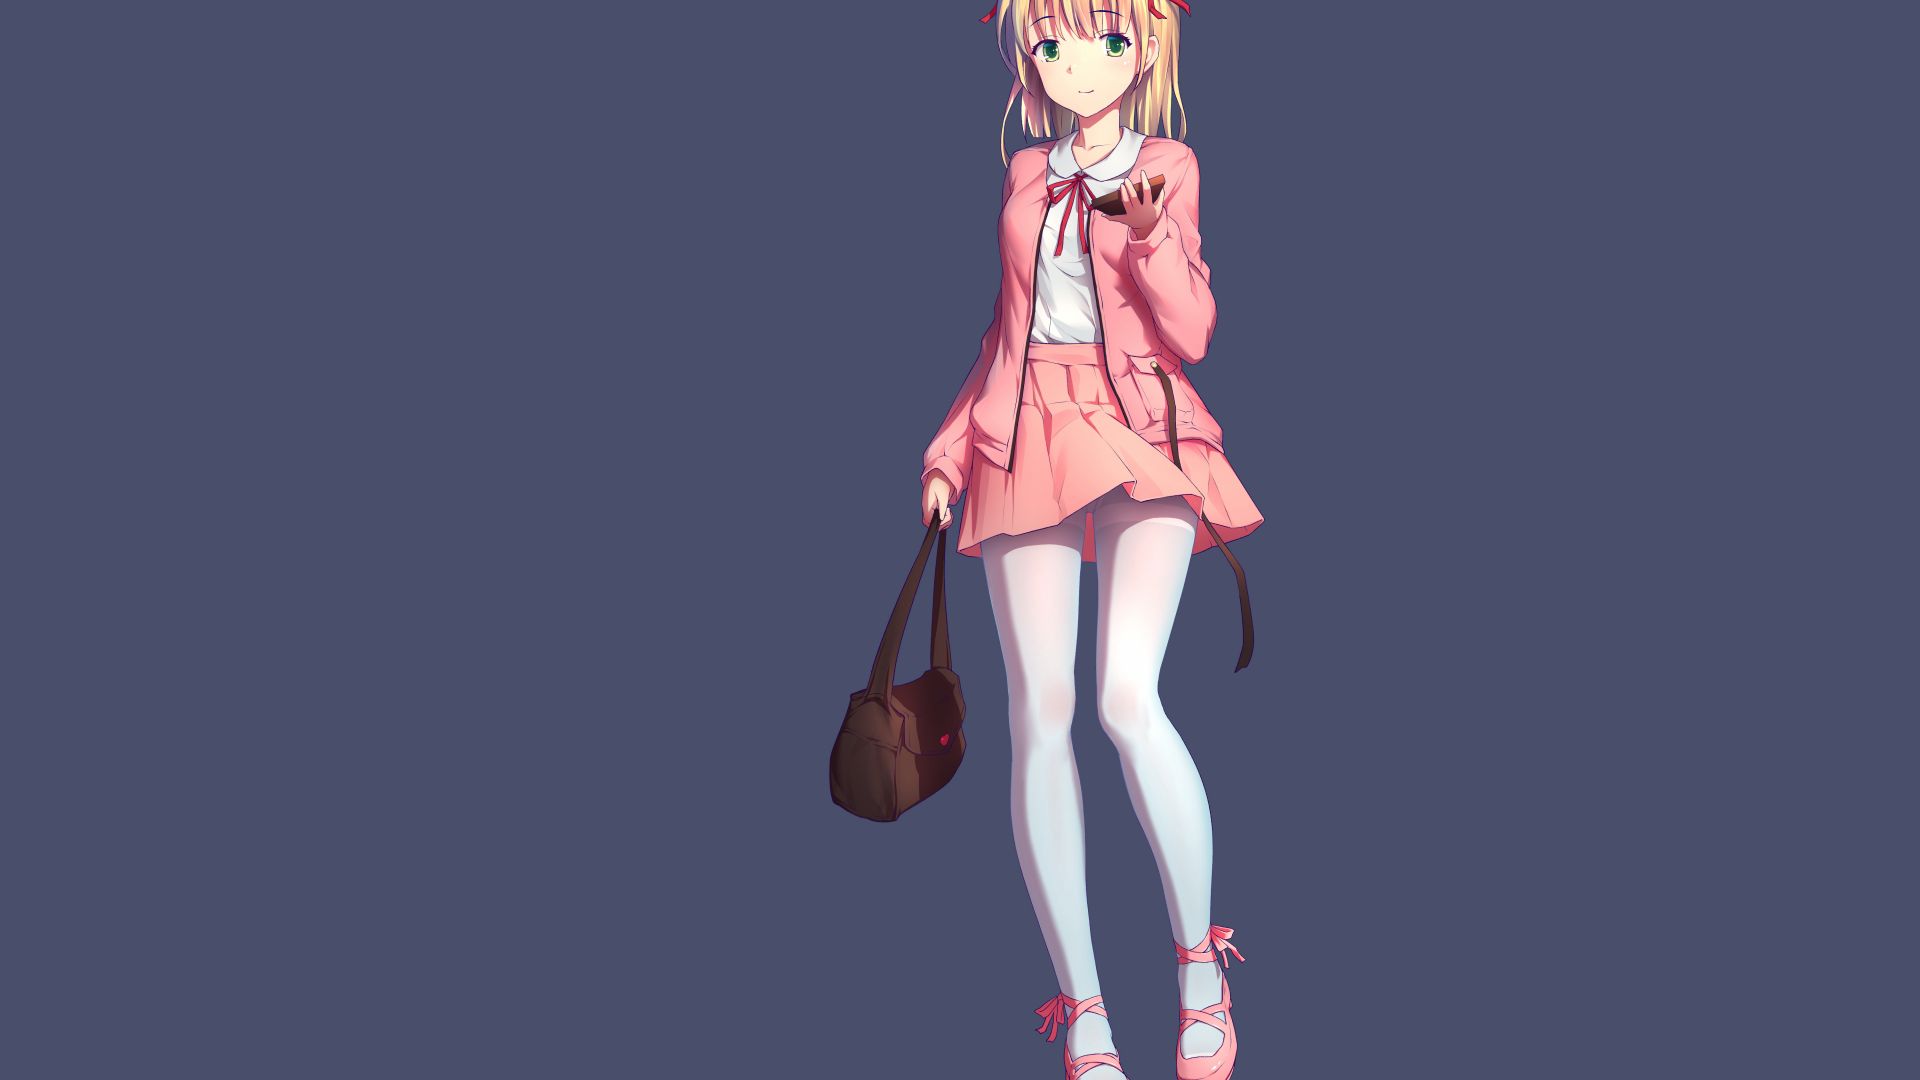 Wallpaper Cute, blonde anime girl, pink dress, original, 5k